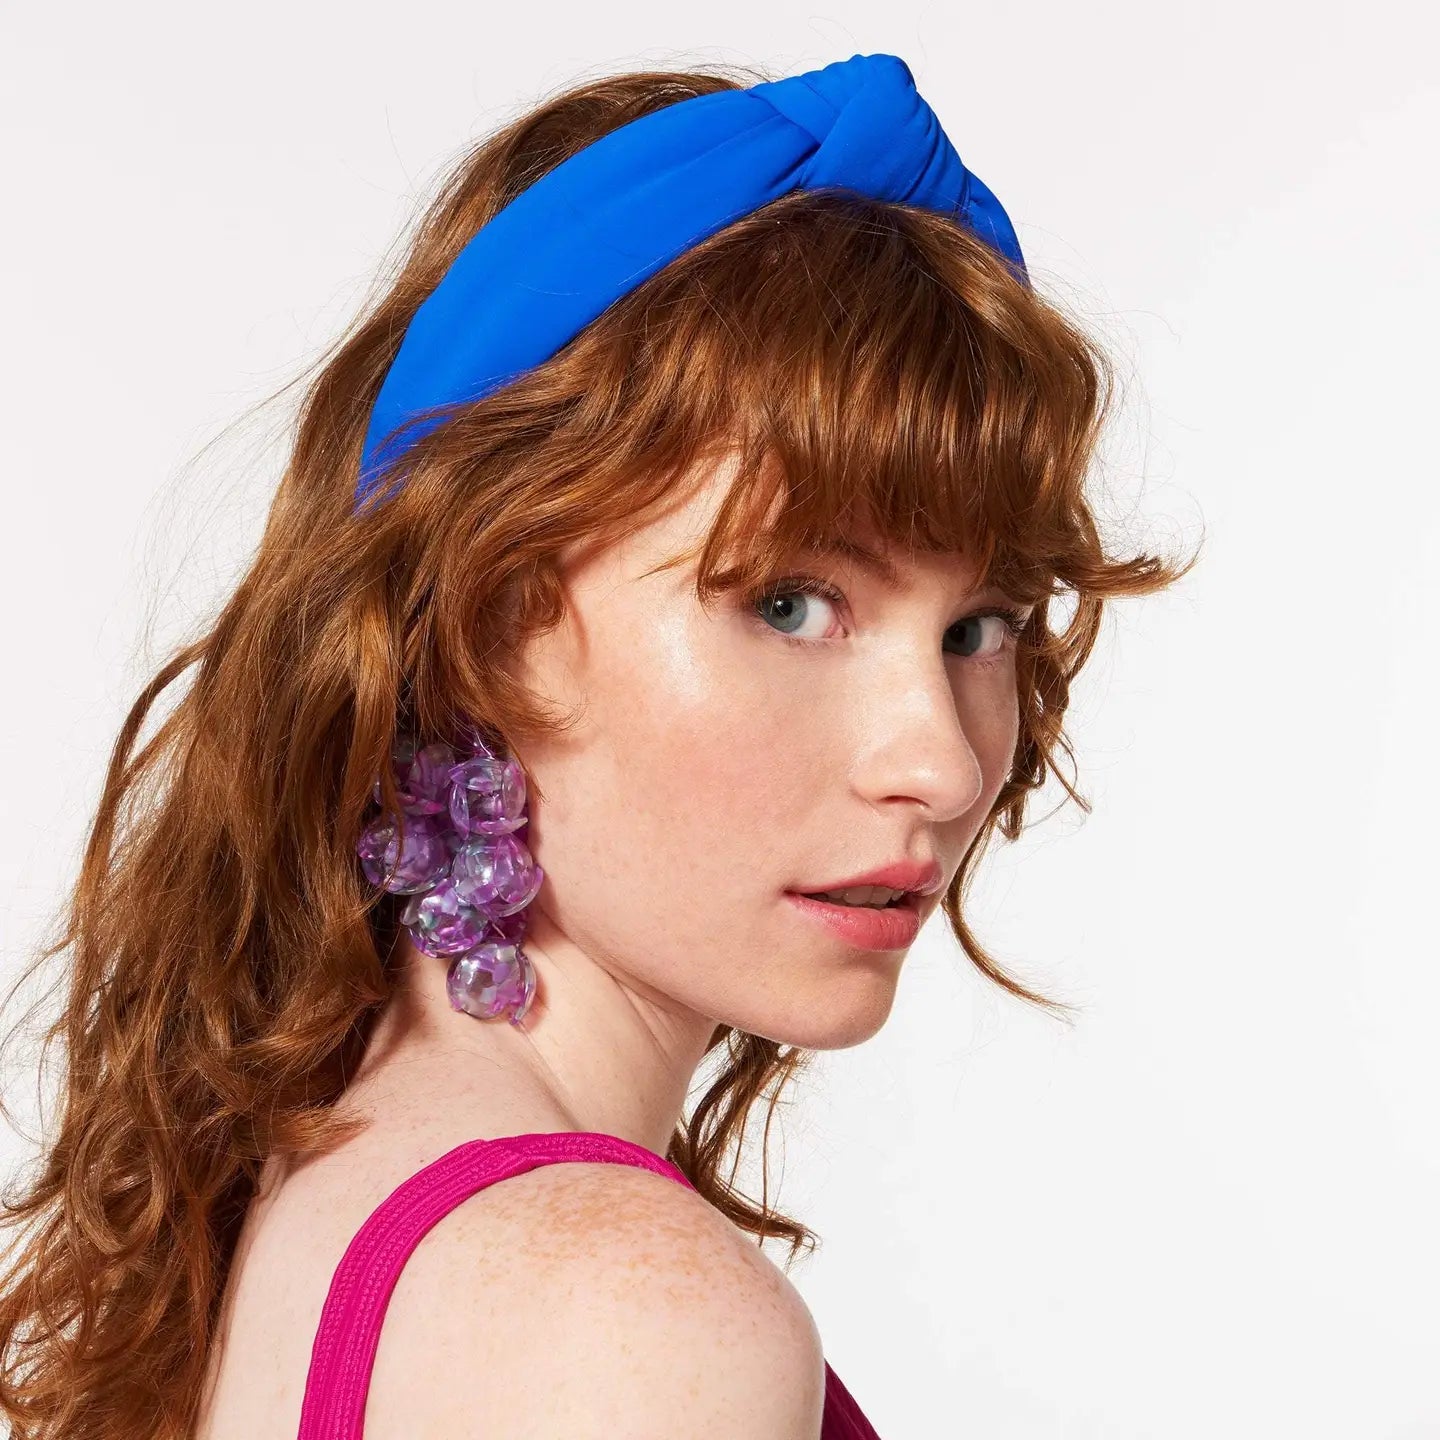 Model wearing Lele Sadoughi Royal Blue Neoprene headband wearing purple earrings and pink top on a white background